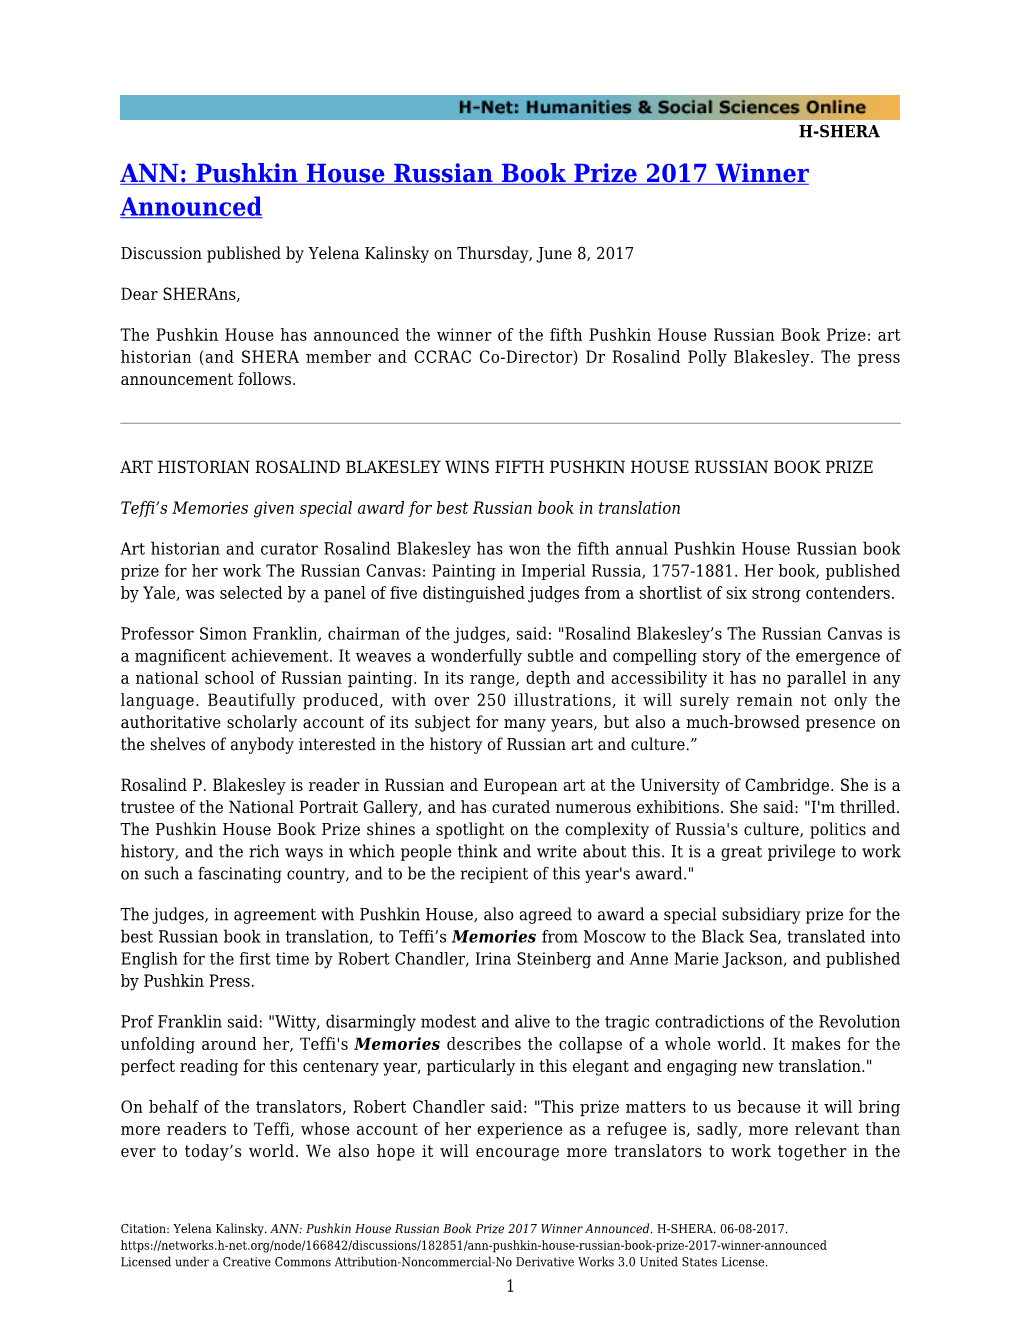 Pushkin House Russian Book Prize 2017 Winner Announced